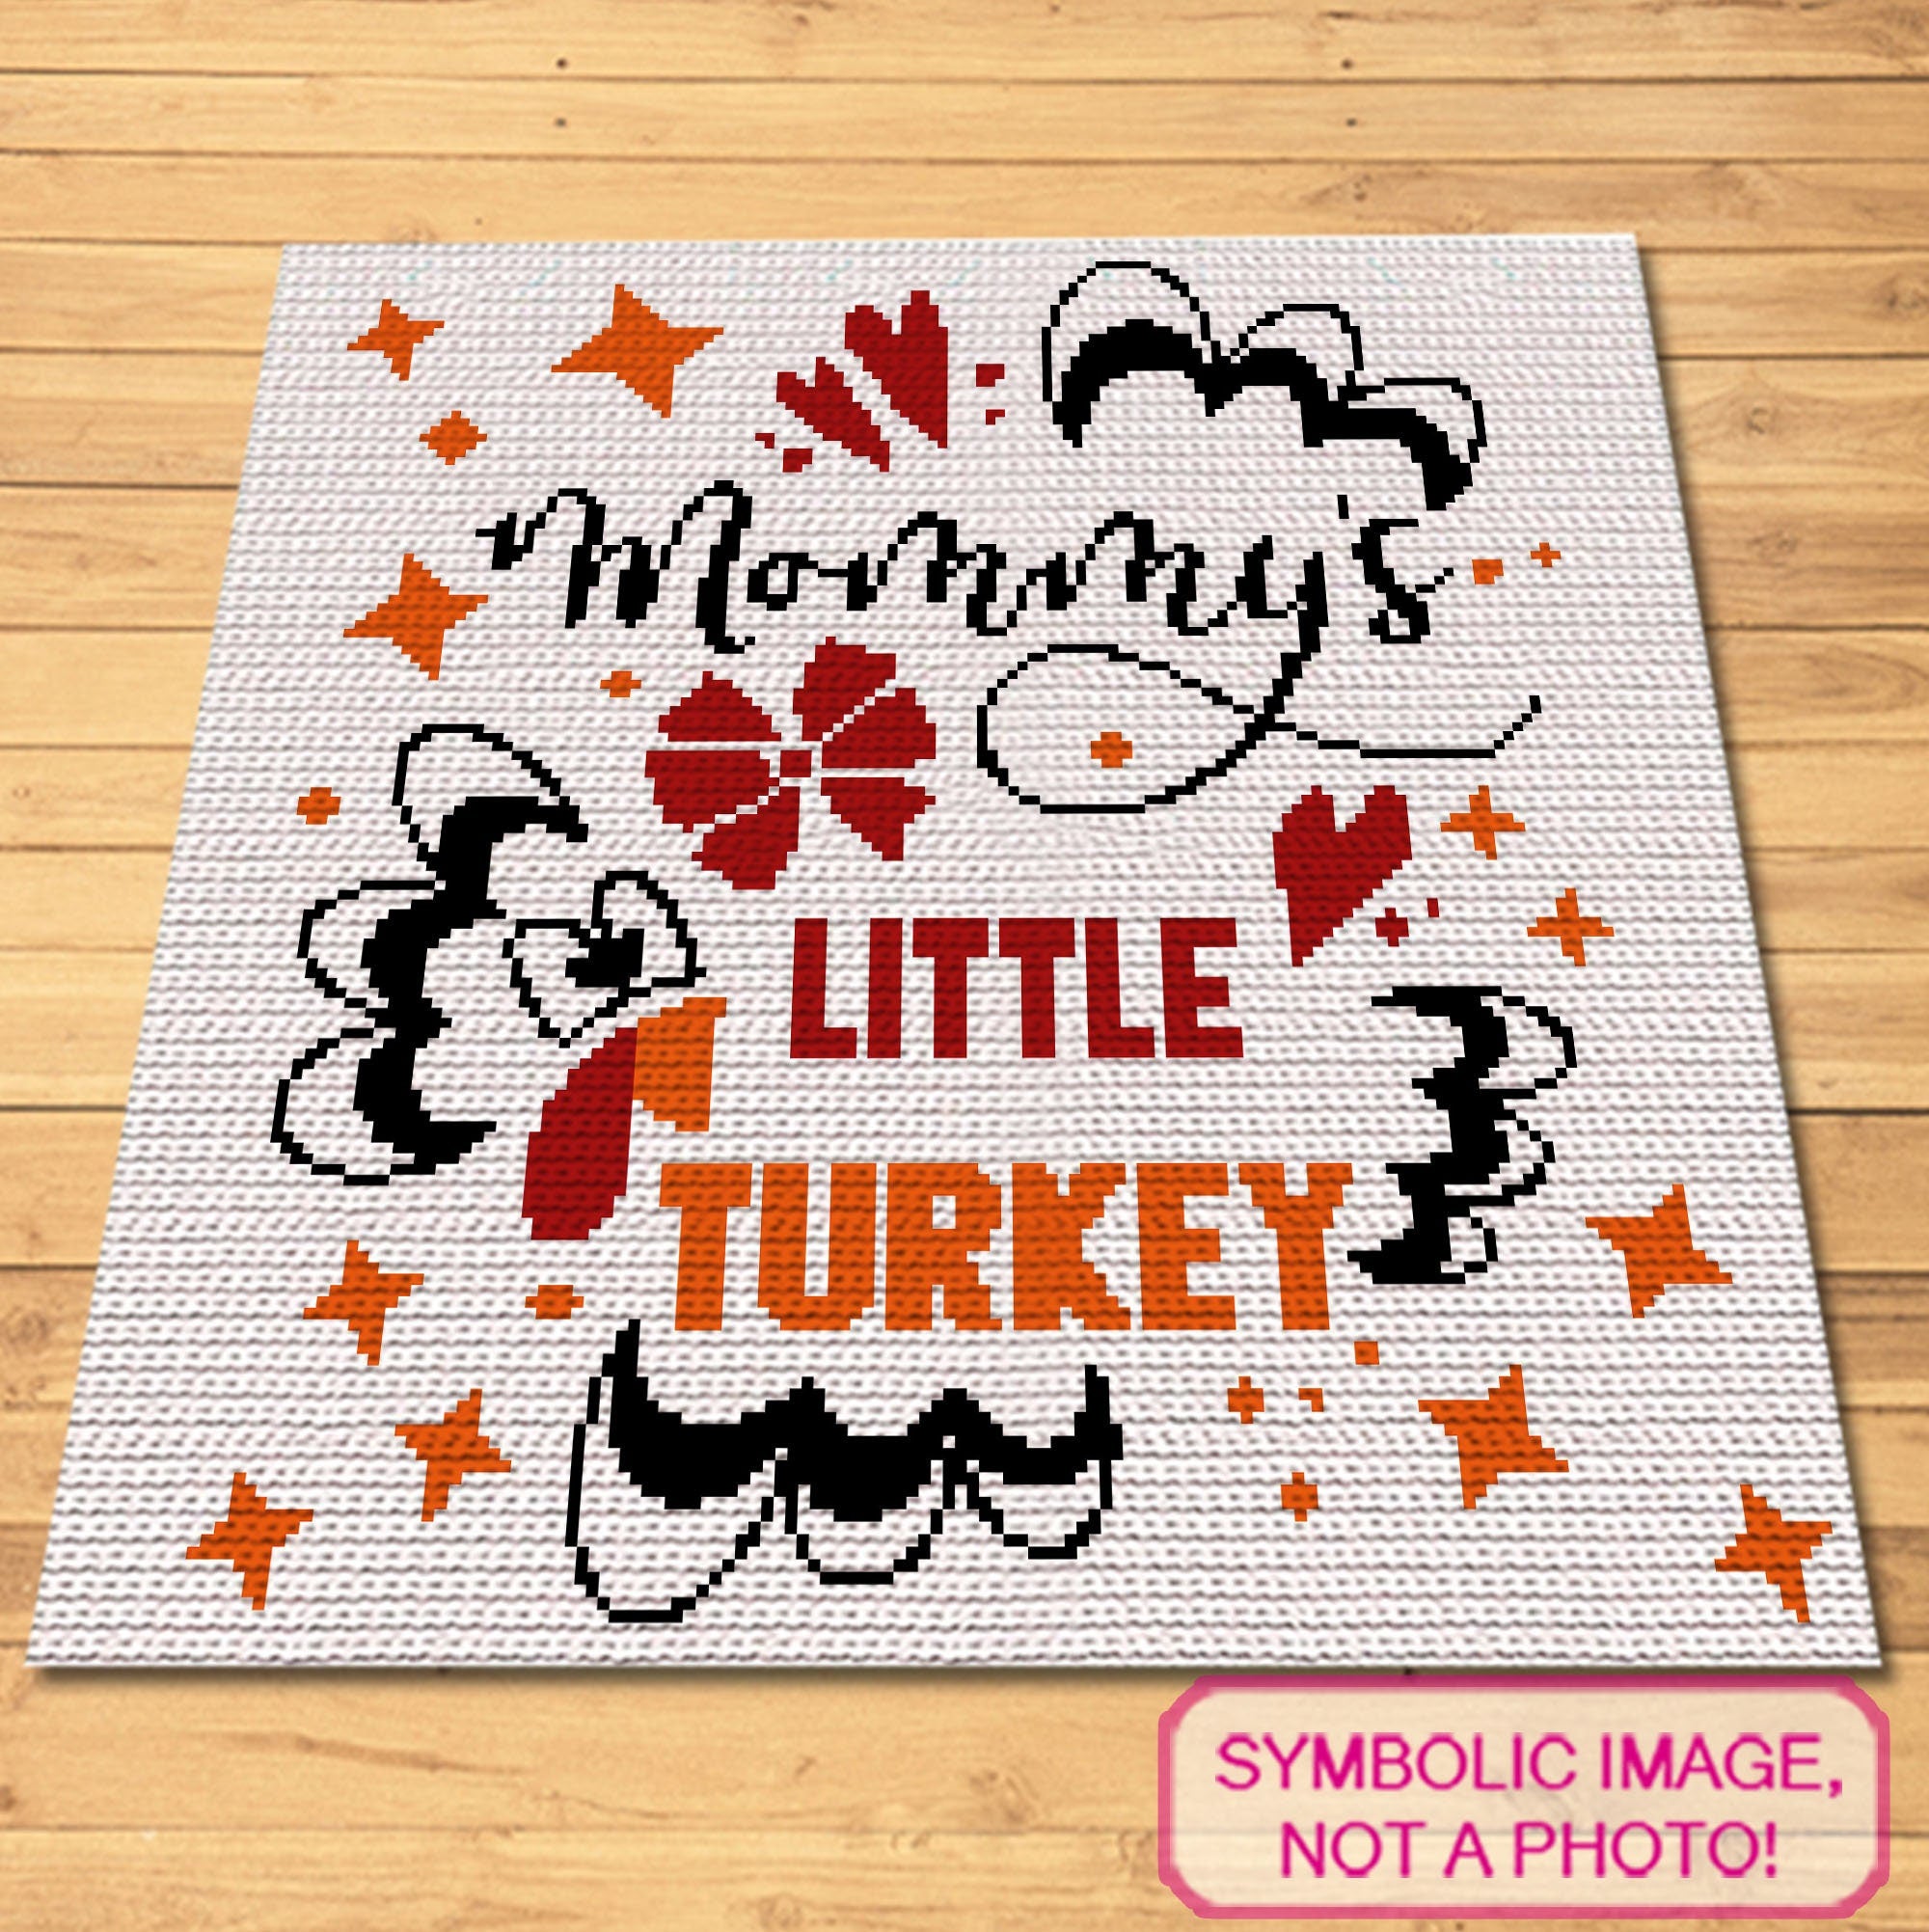 Little Turkey, Thanksgiving Crochet Pattern, Crochet Pillow Cover, Crochet Baby Blanket Pattern